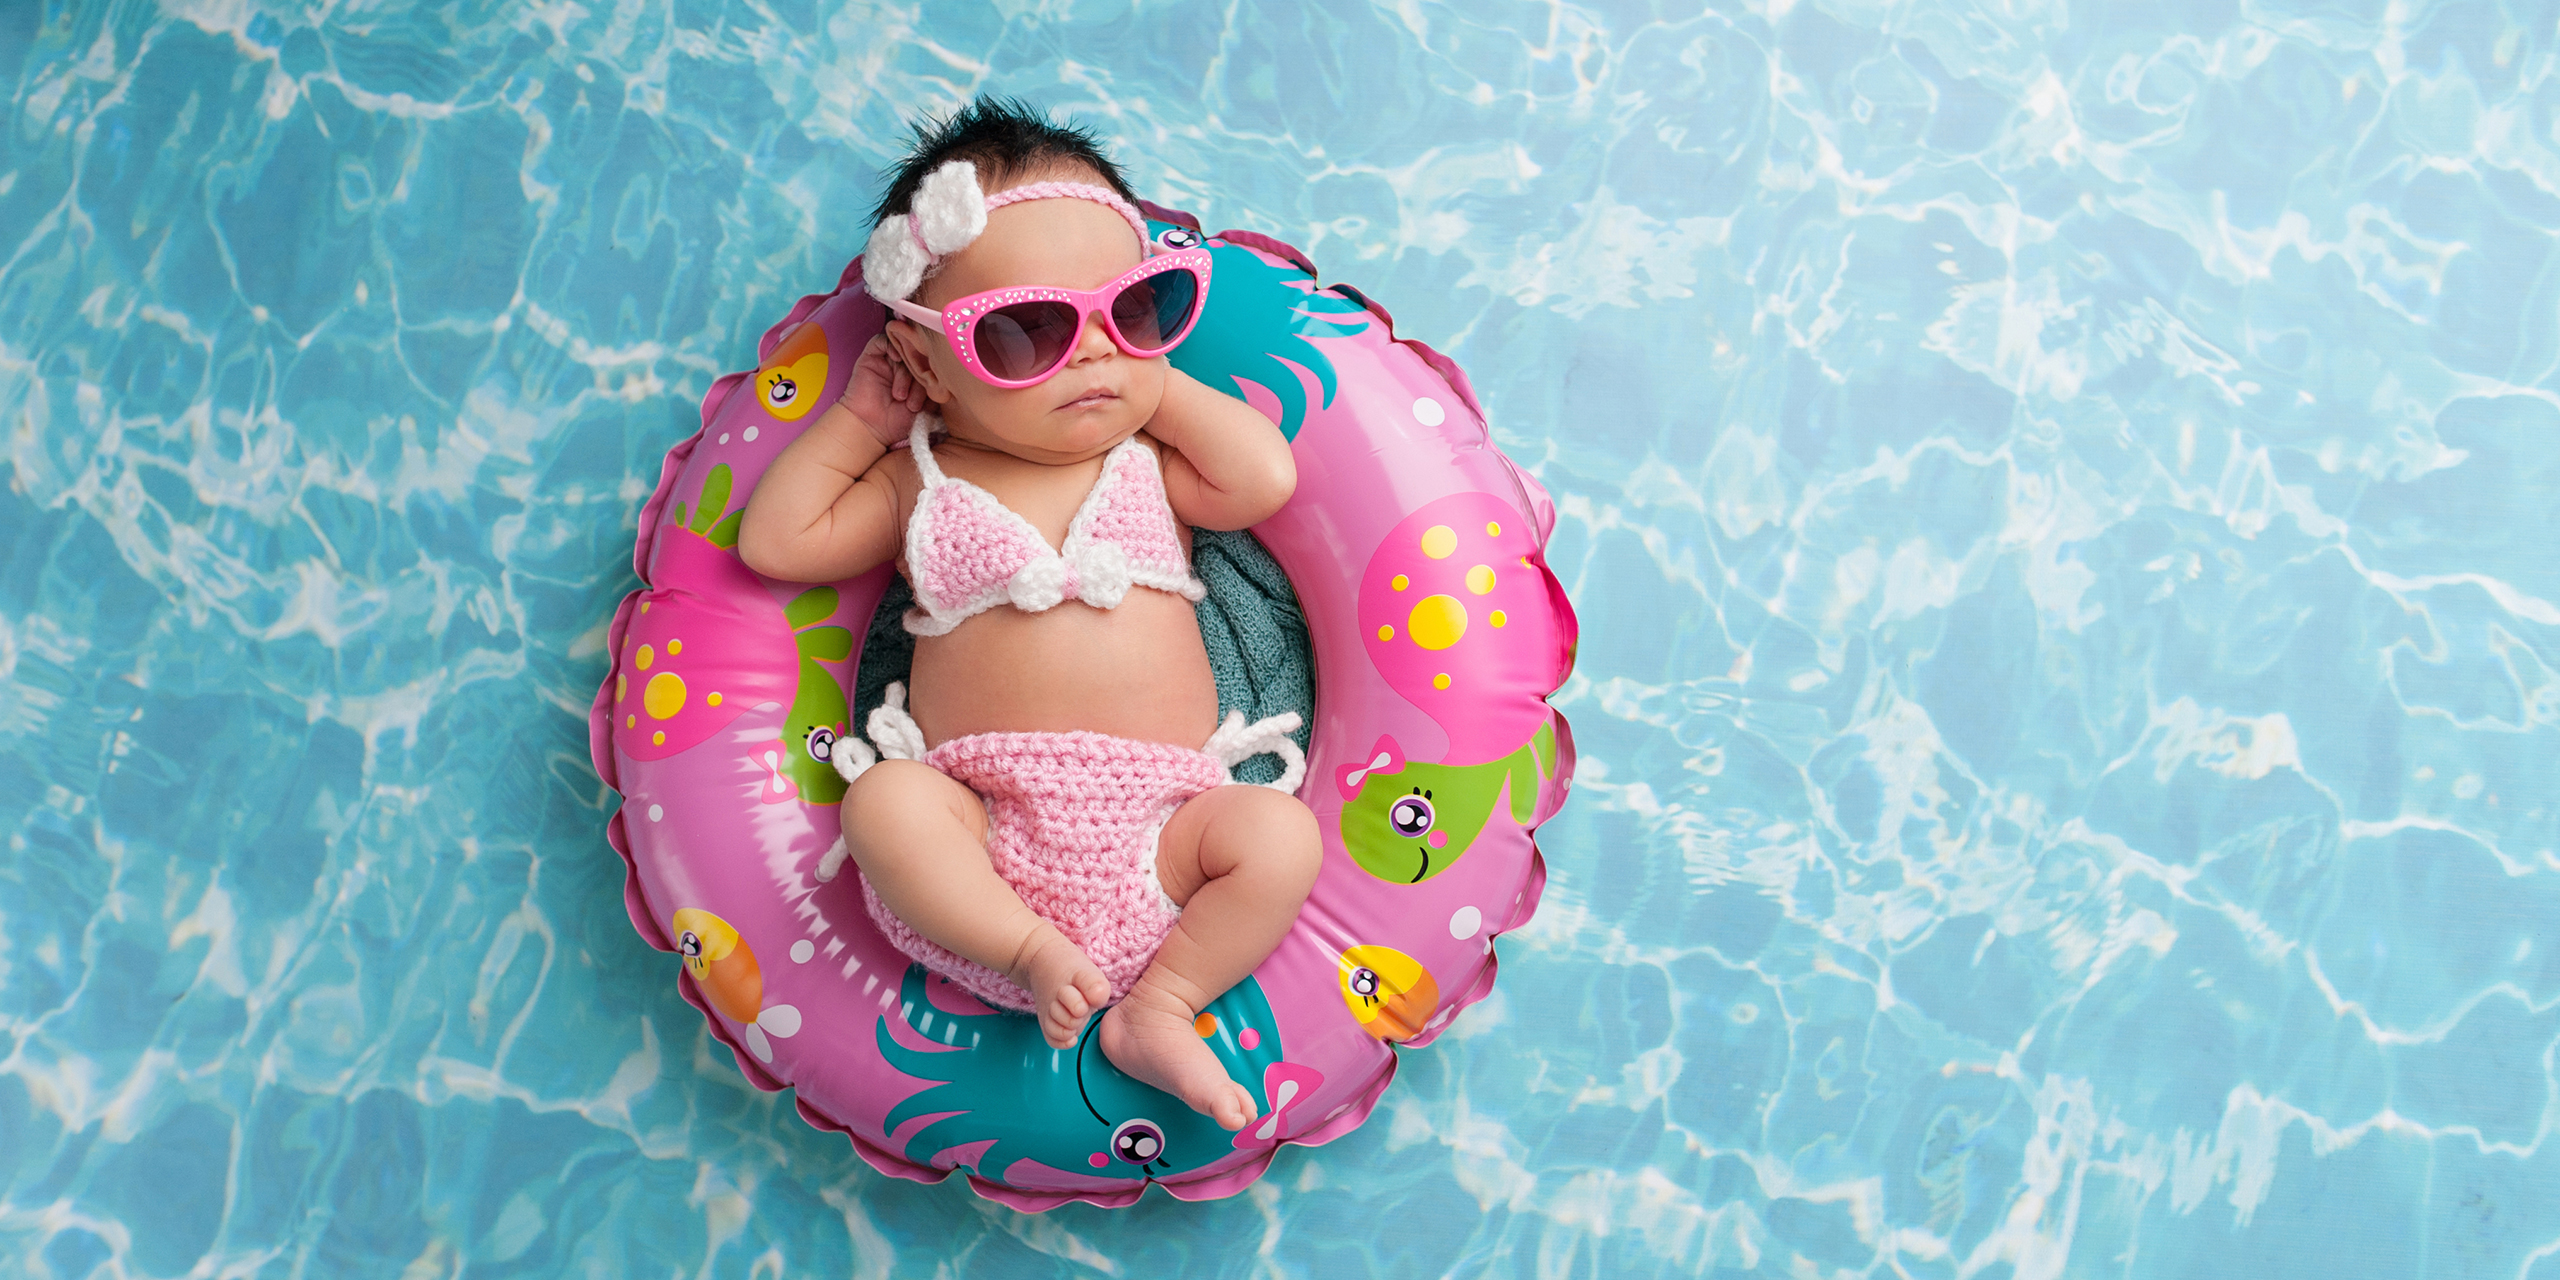 Infant Floating in Pool Wearing Sunglasses; Courtesy of Katrina Elena/Shutterstock.com